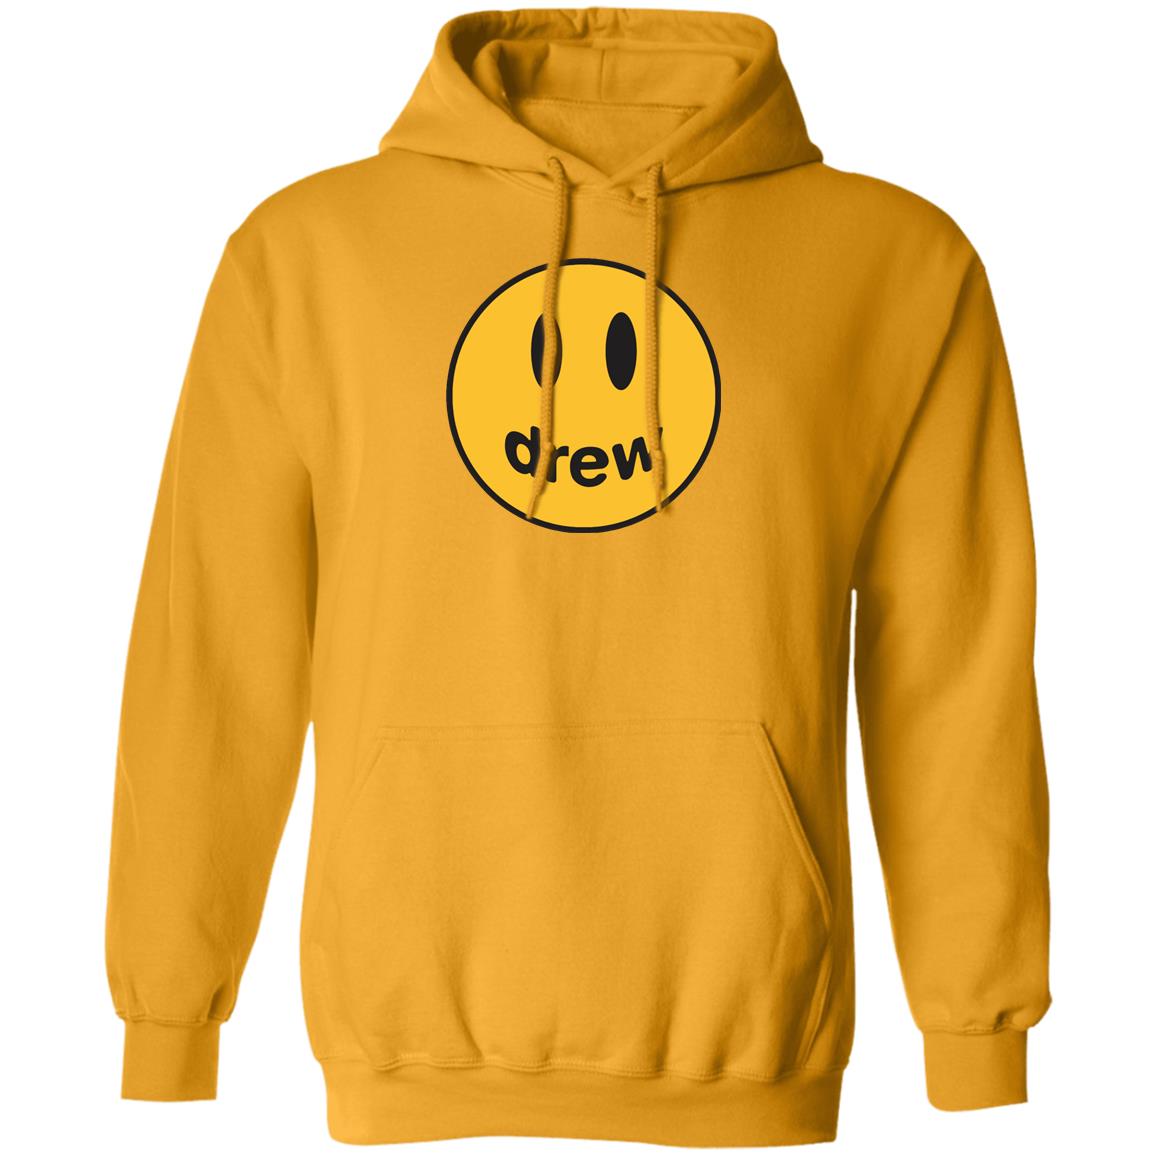 Drew House Mascot Hoodie (Golden Yellow)